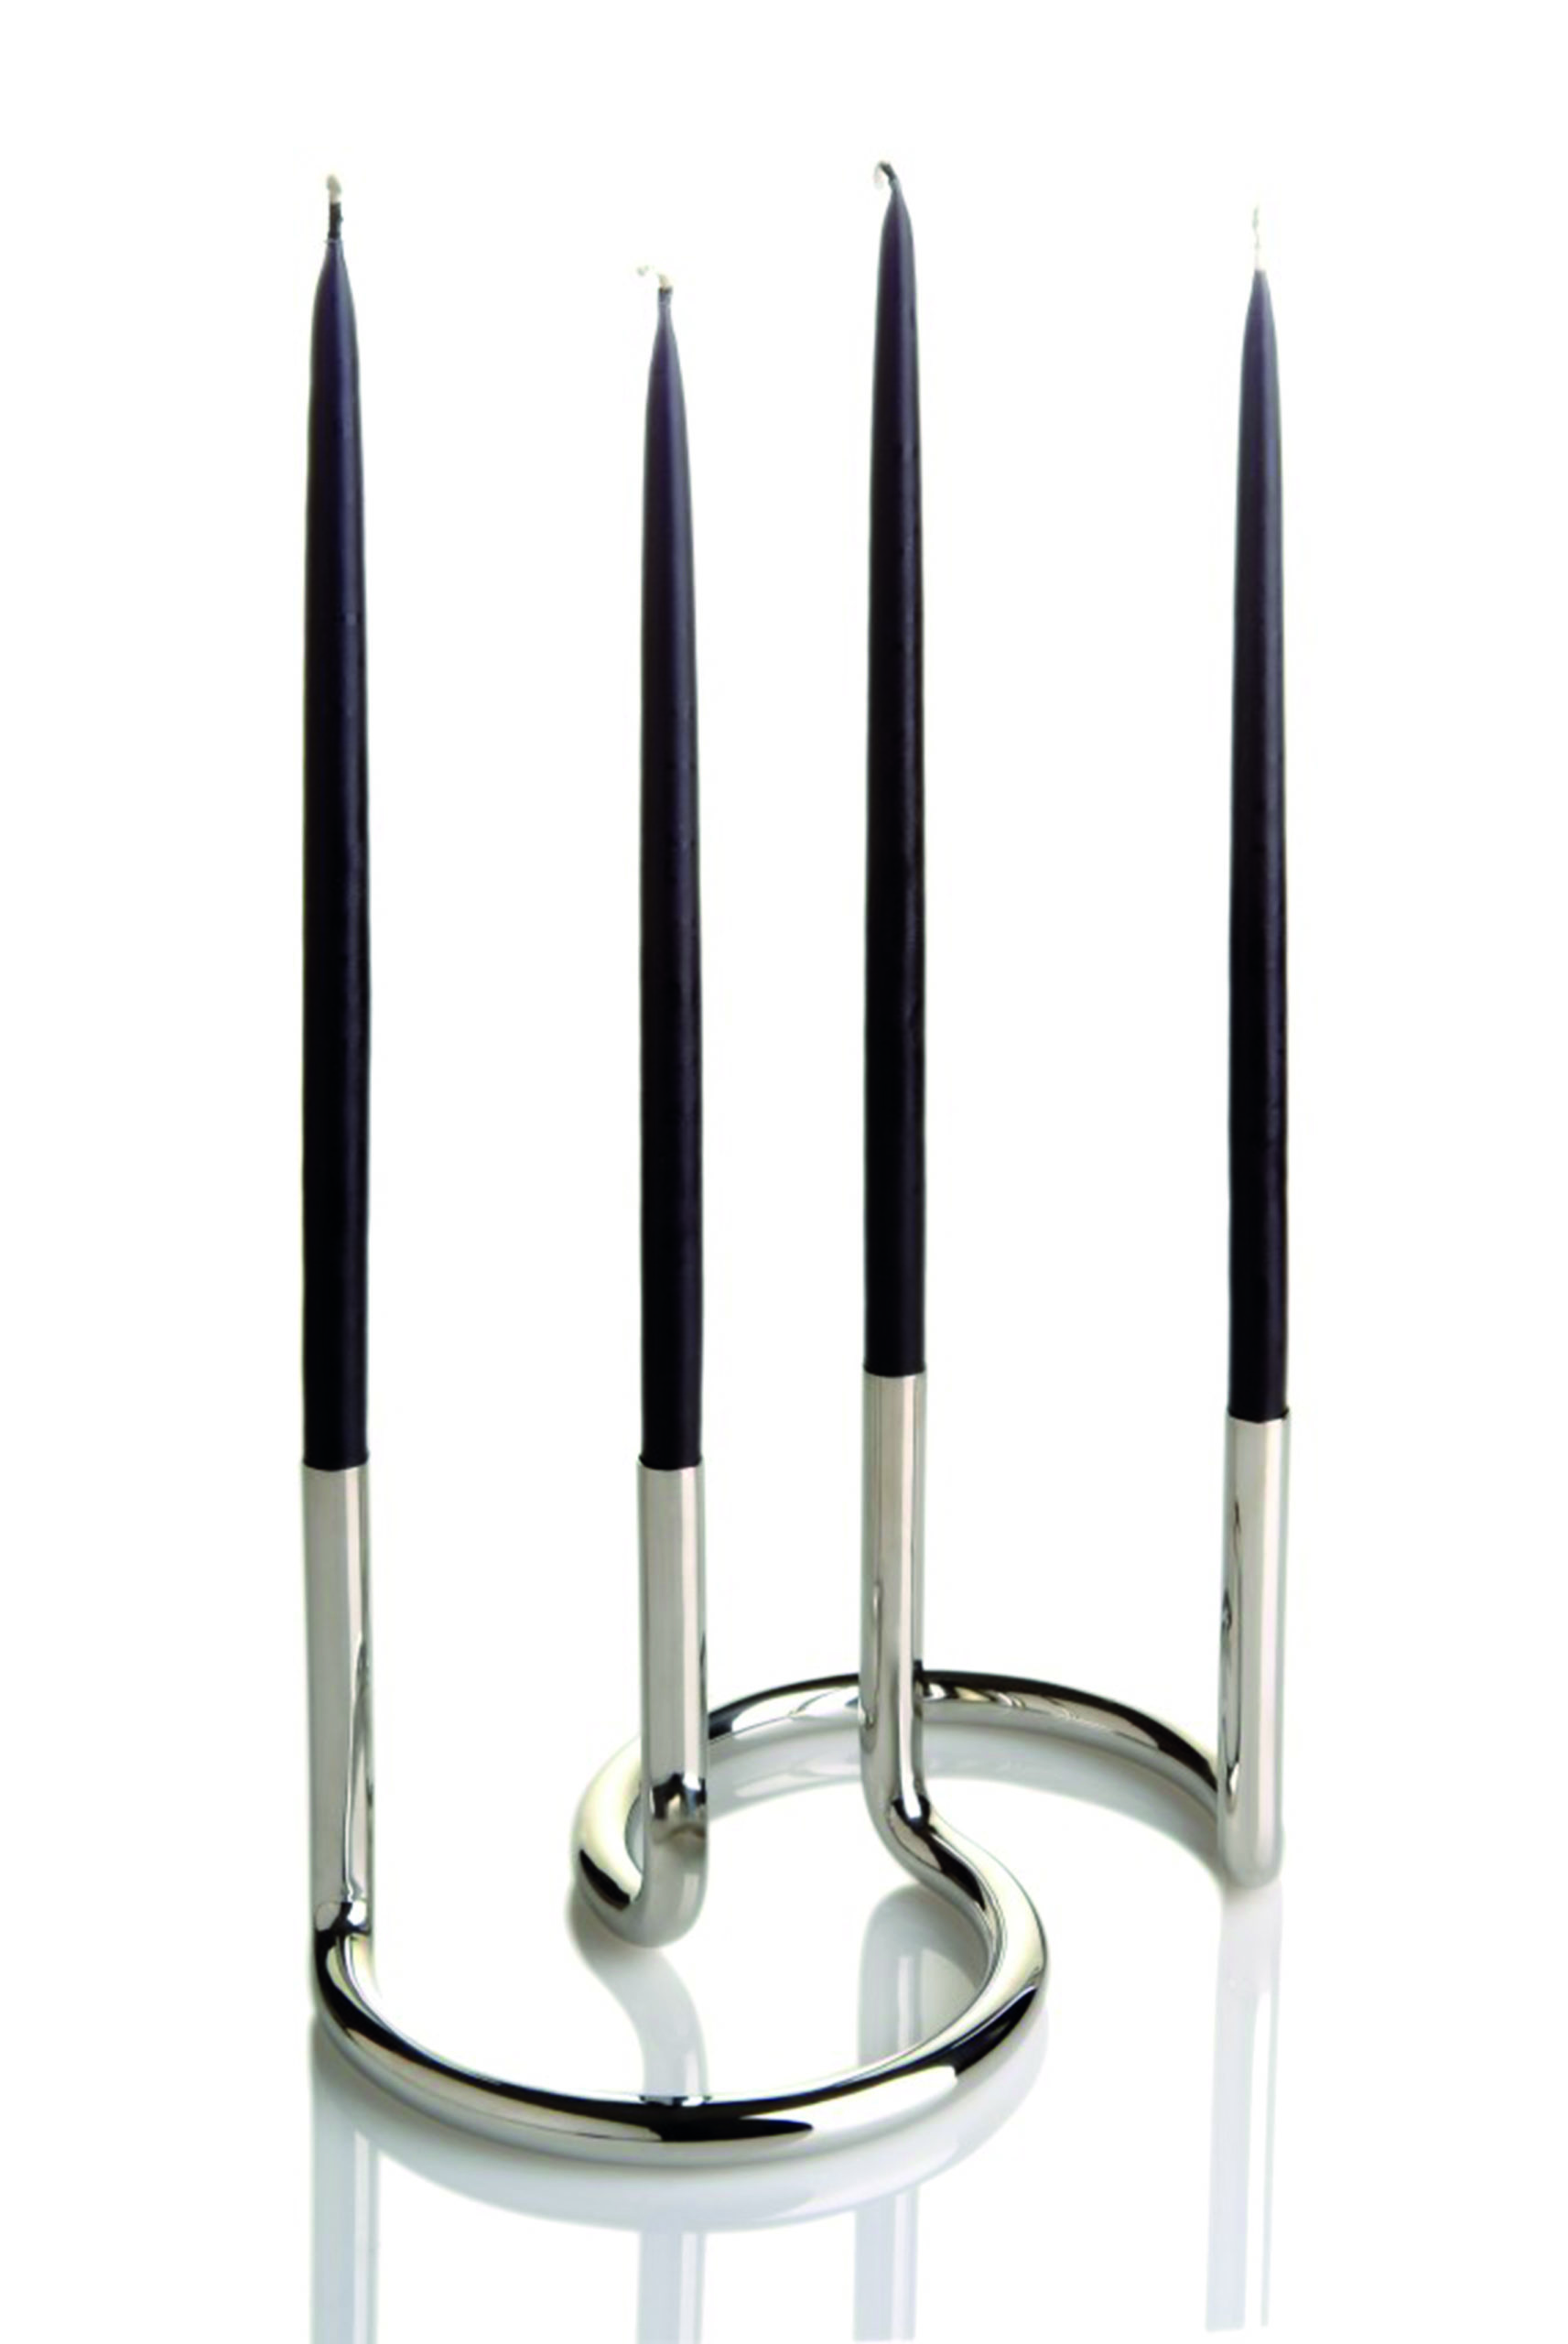 Architectmade-Gemini-Polished-Stainless-Steel-Candleholder-Peter-Karpf-4